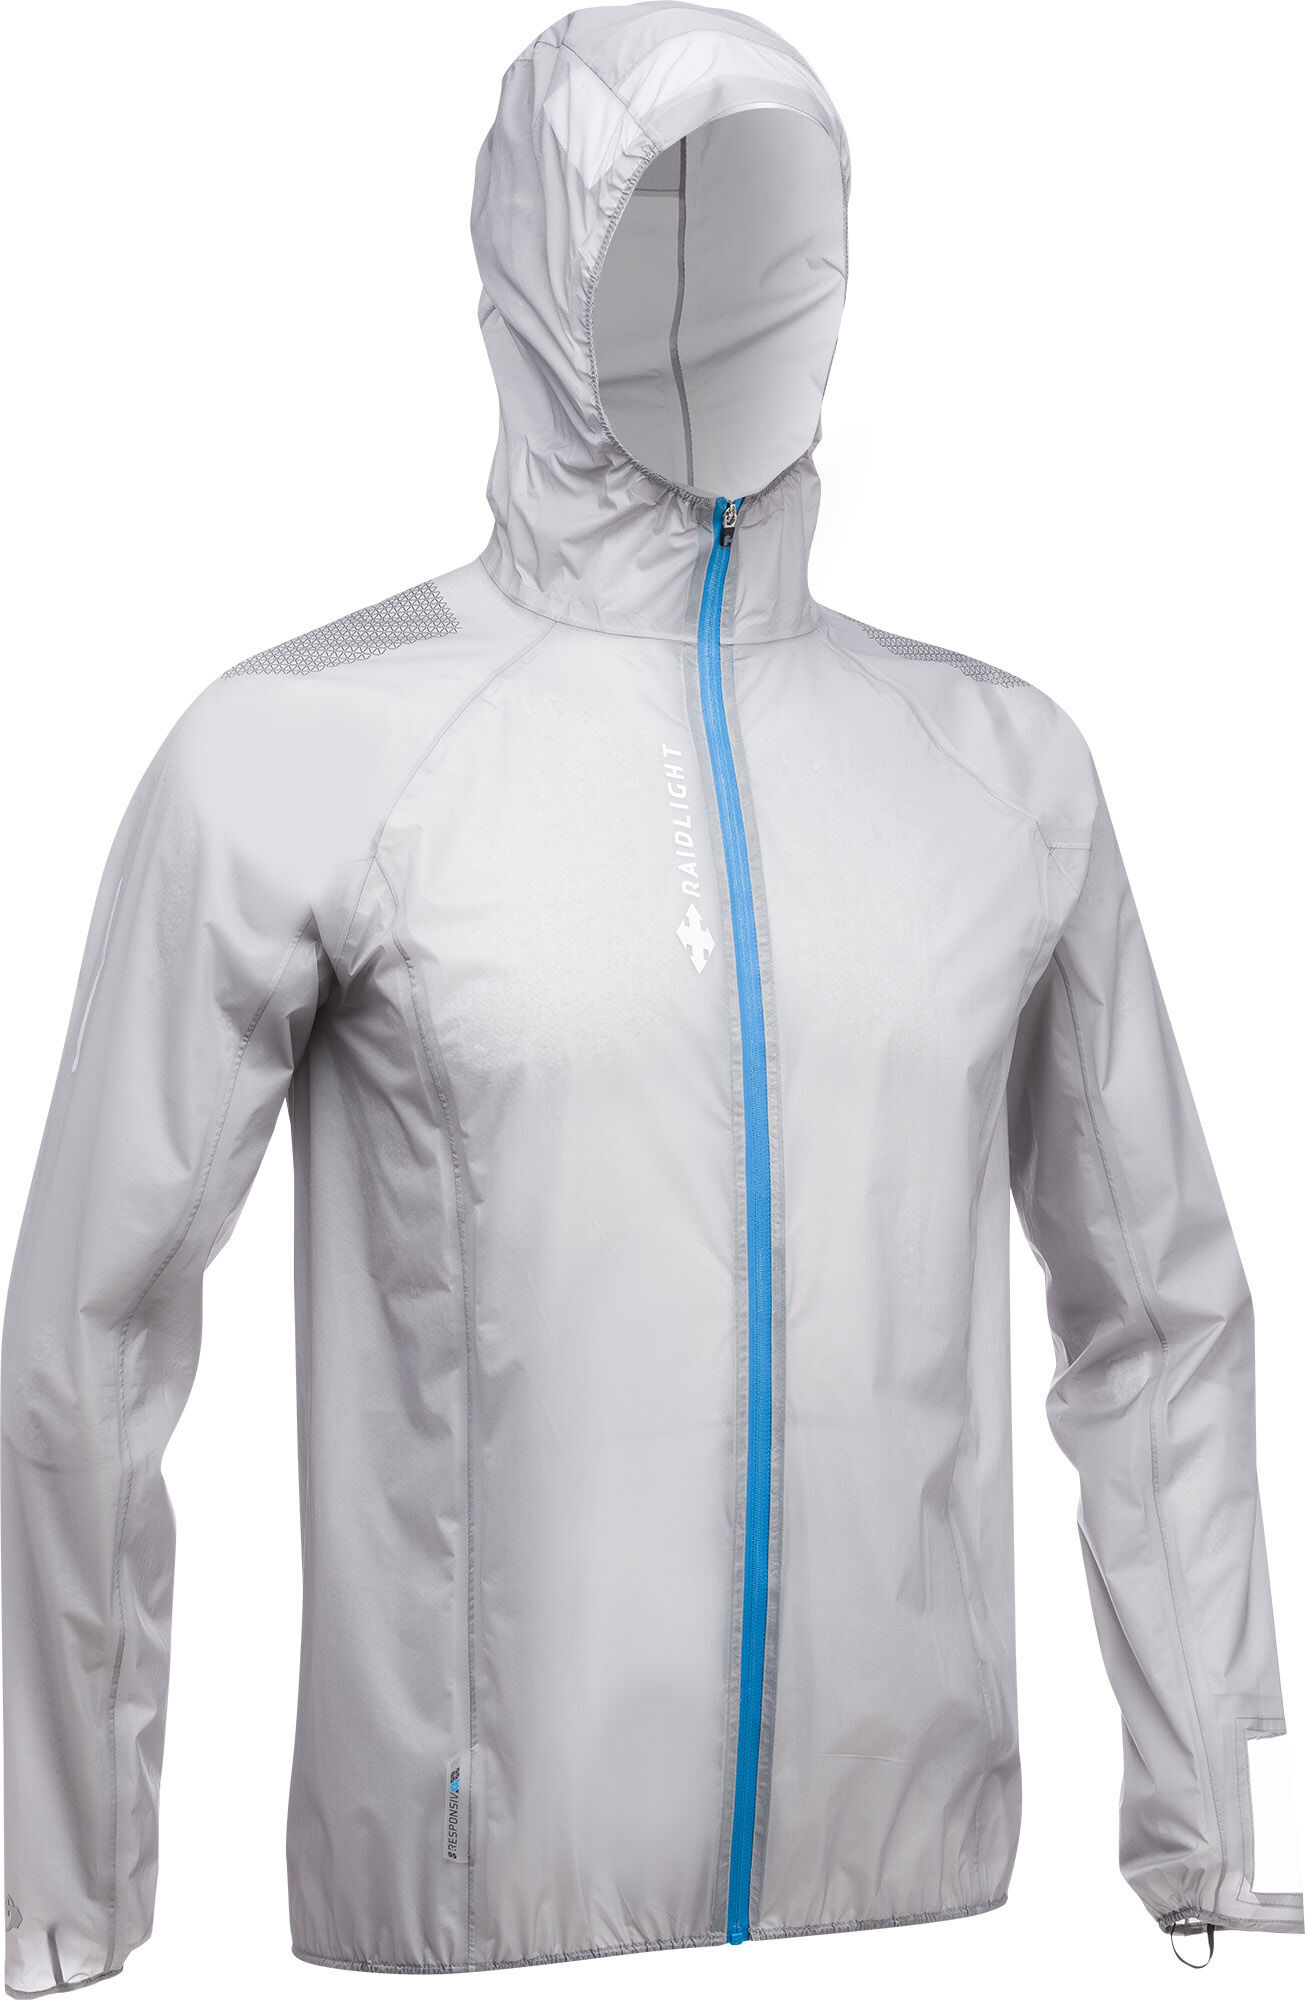 Hyperlight Mp + Jacket - Chaqueta impermeable - Hombre